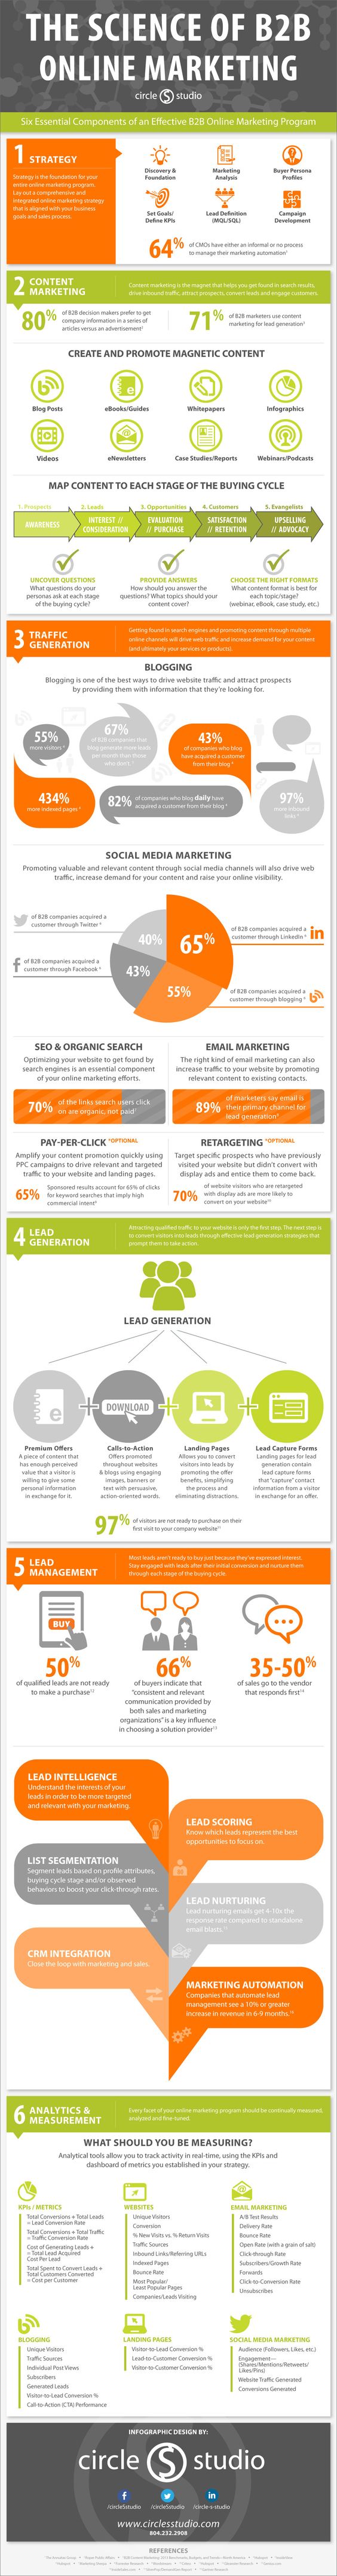 Effective B2B Online #Marketing Plan #infographic #digitalmarketing